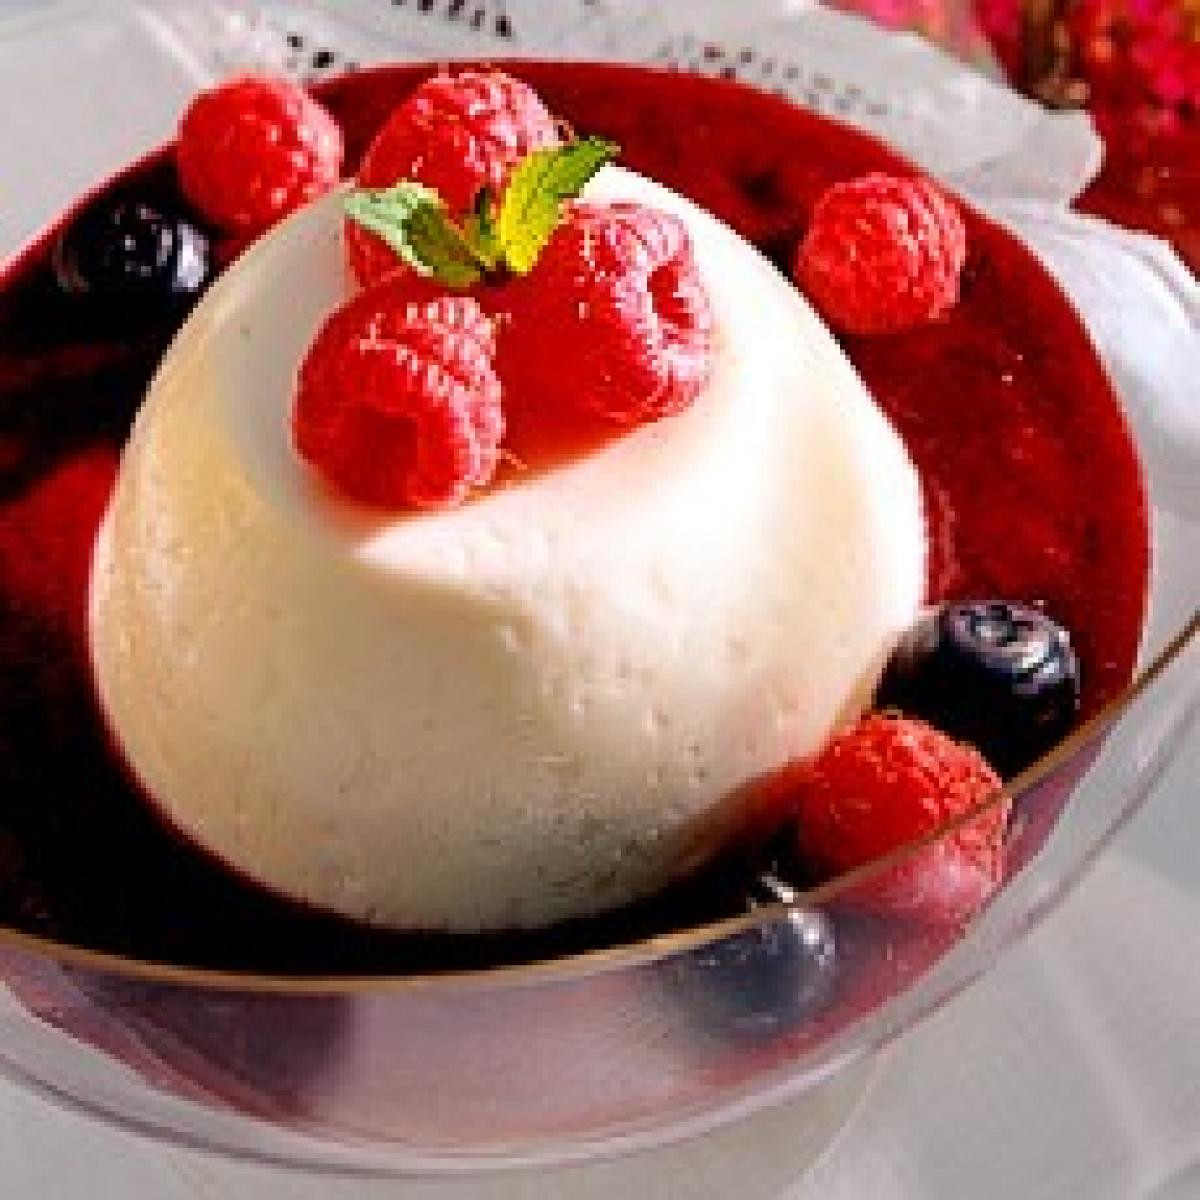 Mascarpone Desserts Recipe
 Mascarpone Creams with Summer Fruit Puree